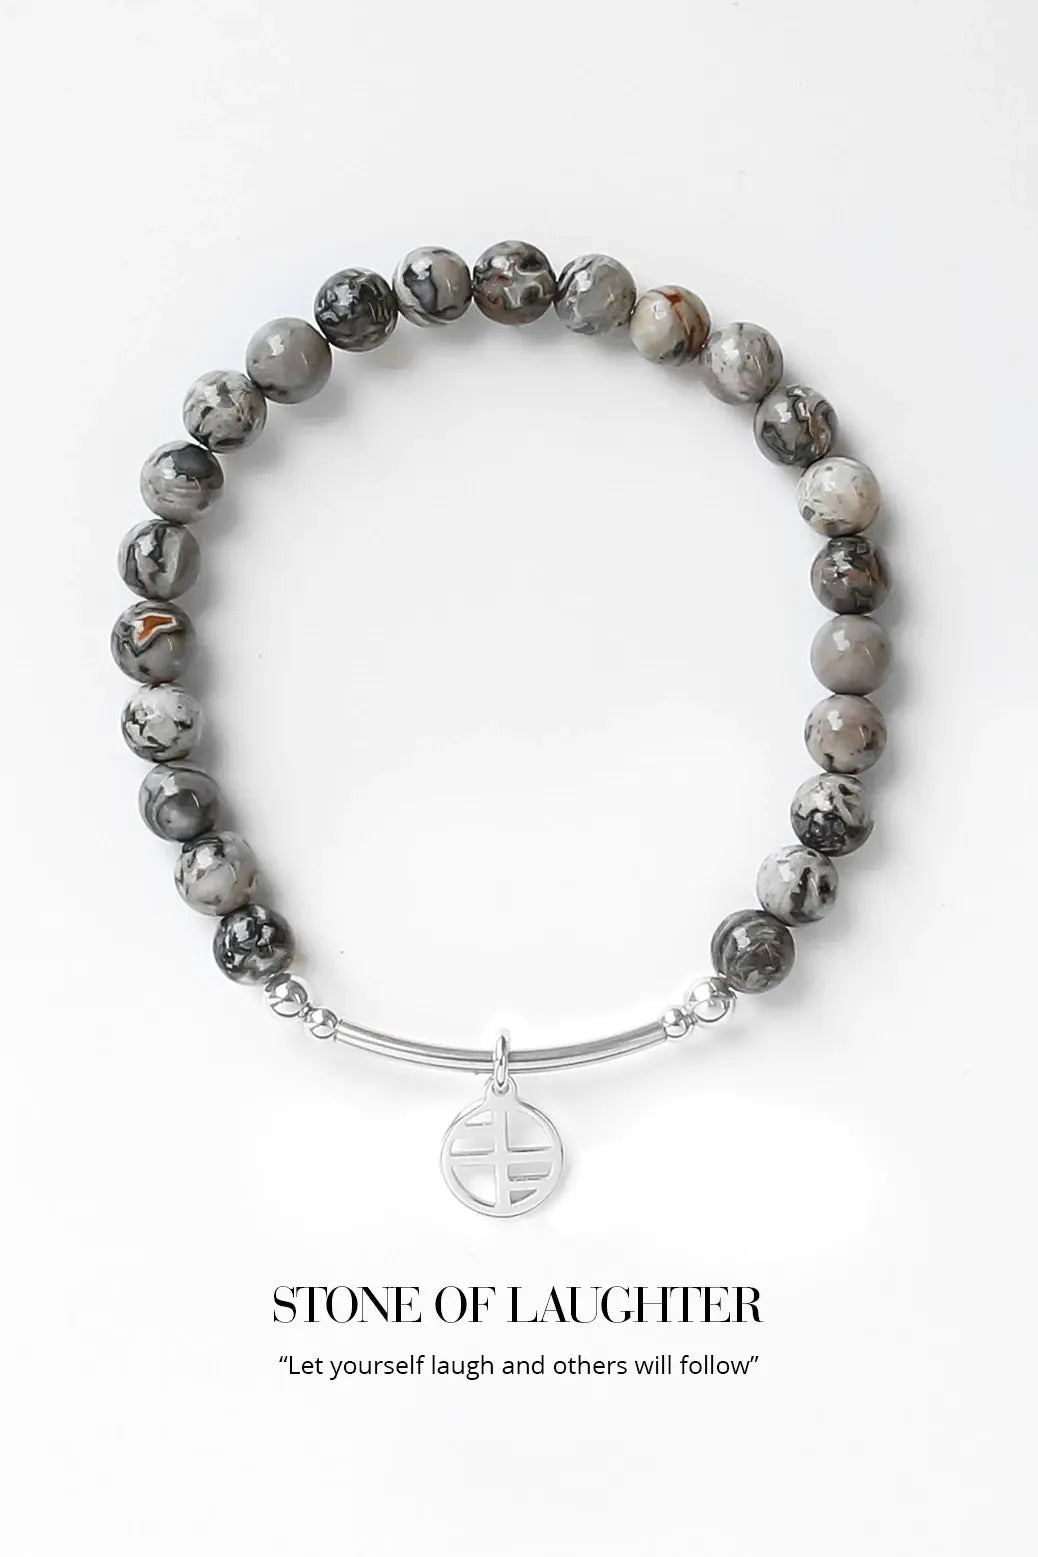 The    Charm Bracelet by  Francesca Jewellery from the Bracelets Collection.